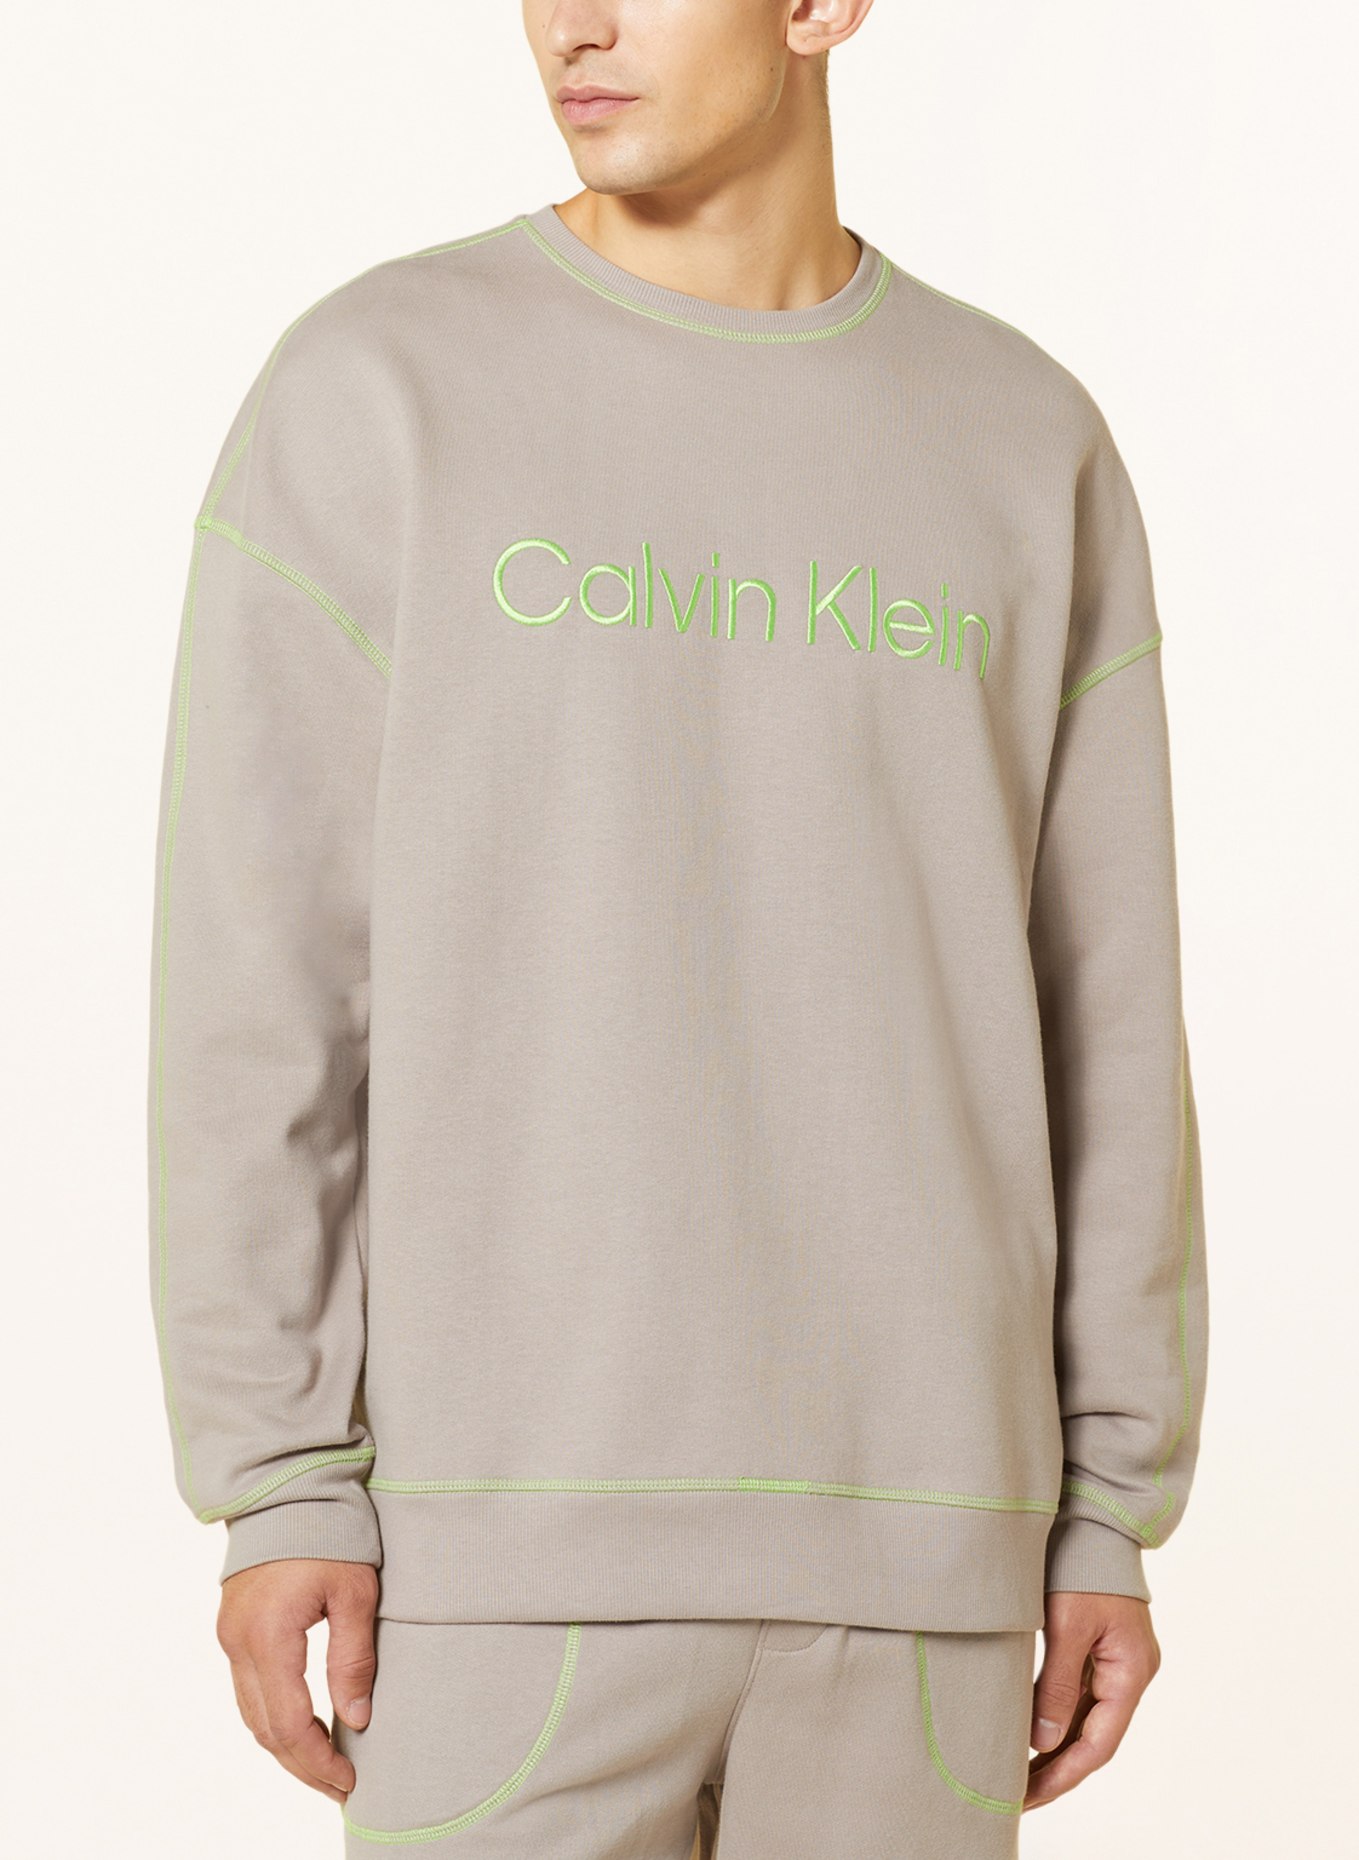 Calvin Klein Lounge shirt FUTURE SHIFT in gray